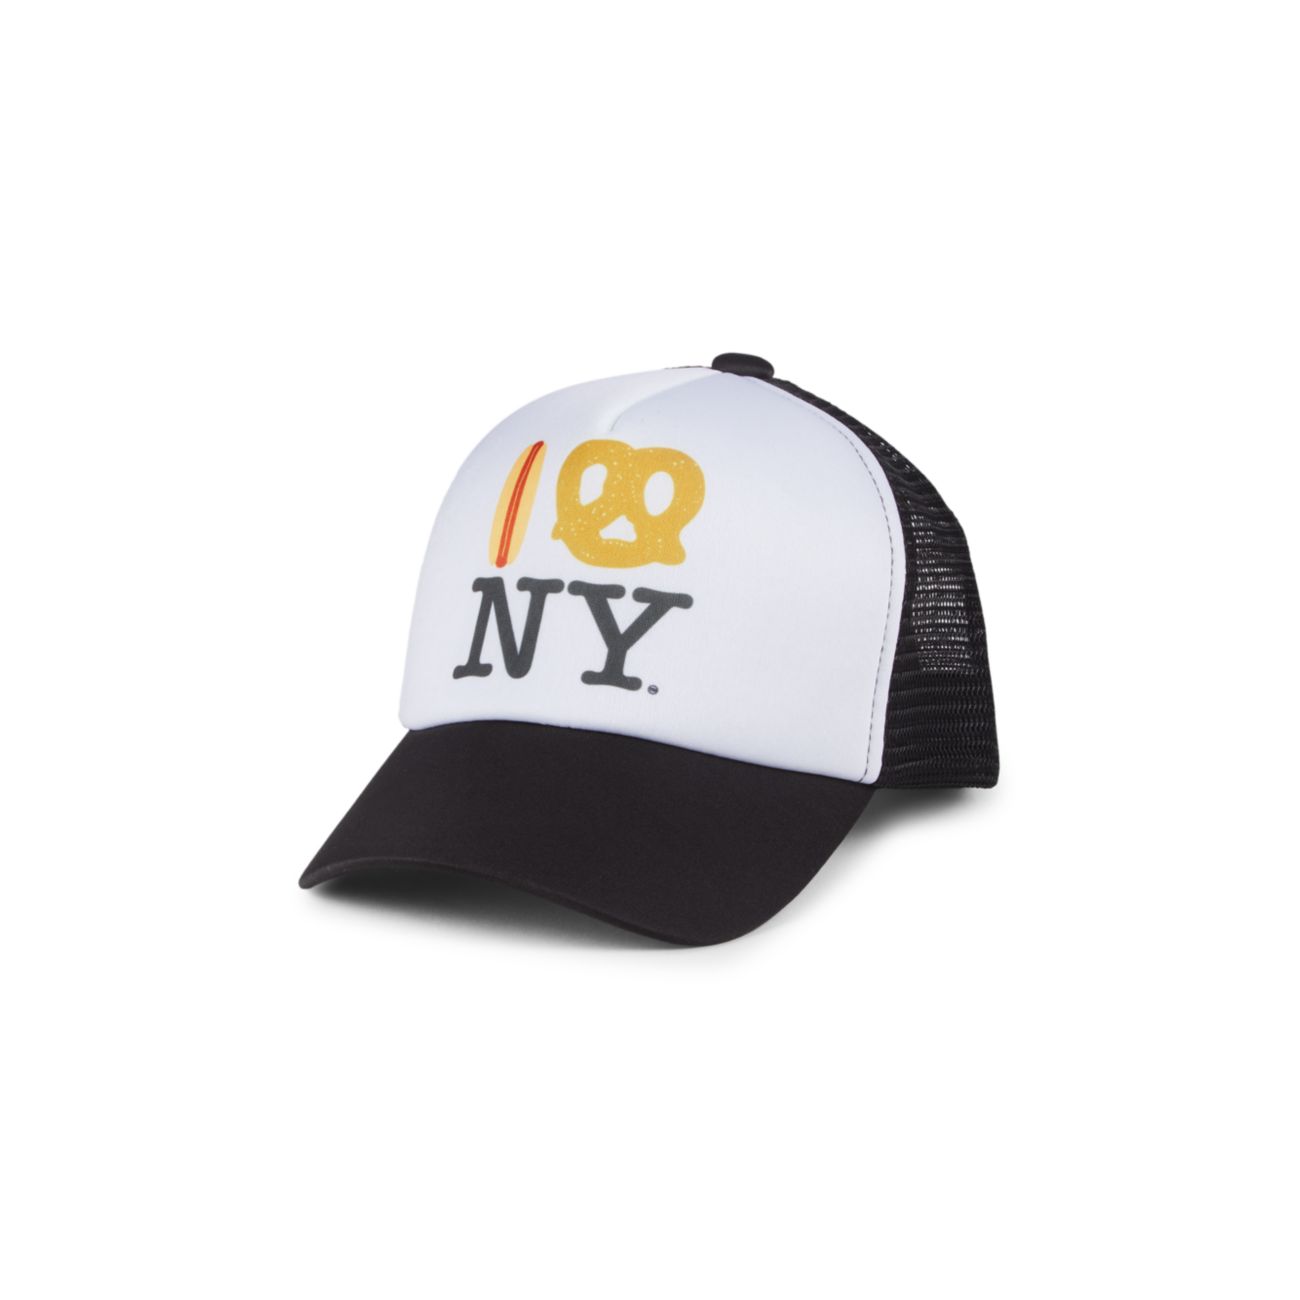 Хот-дог Крендель New York Trucker Hat PiccoliNY